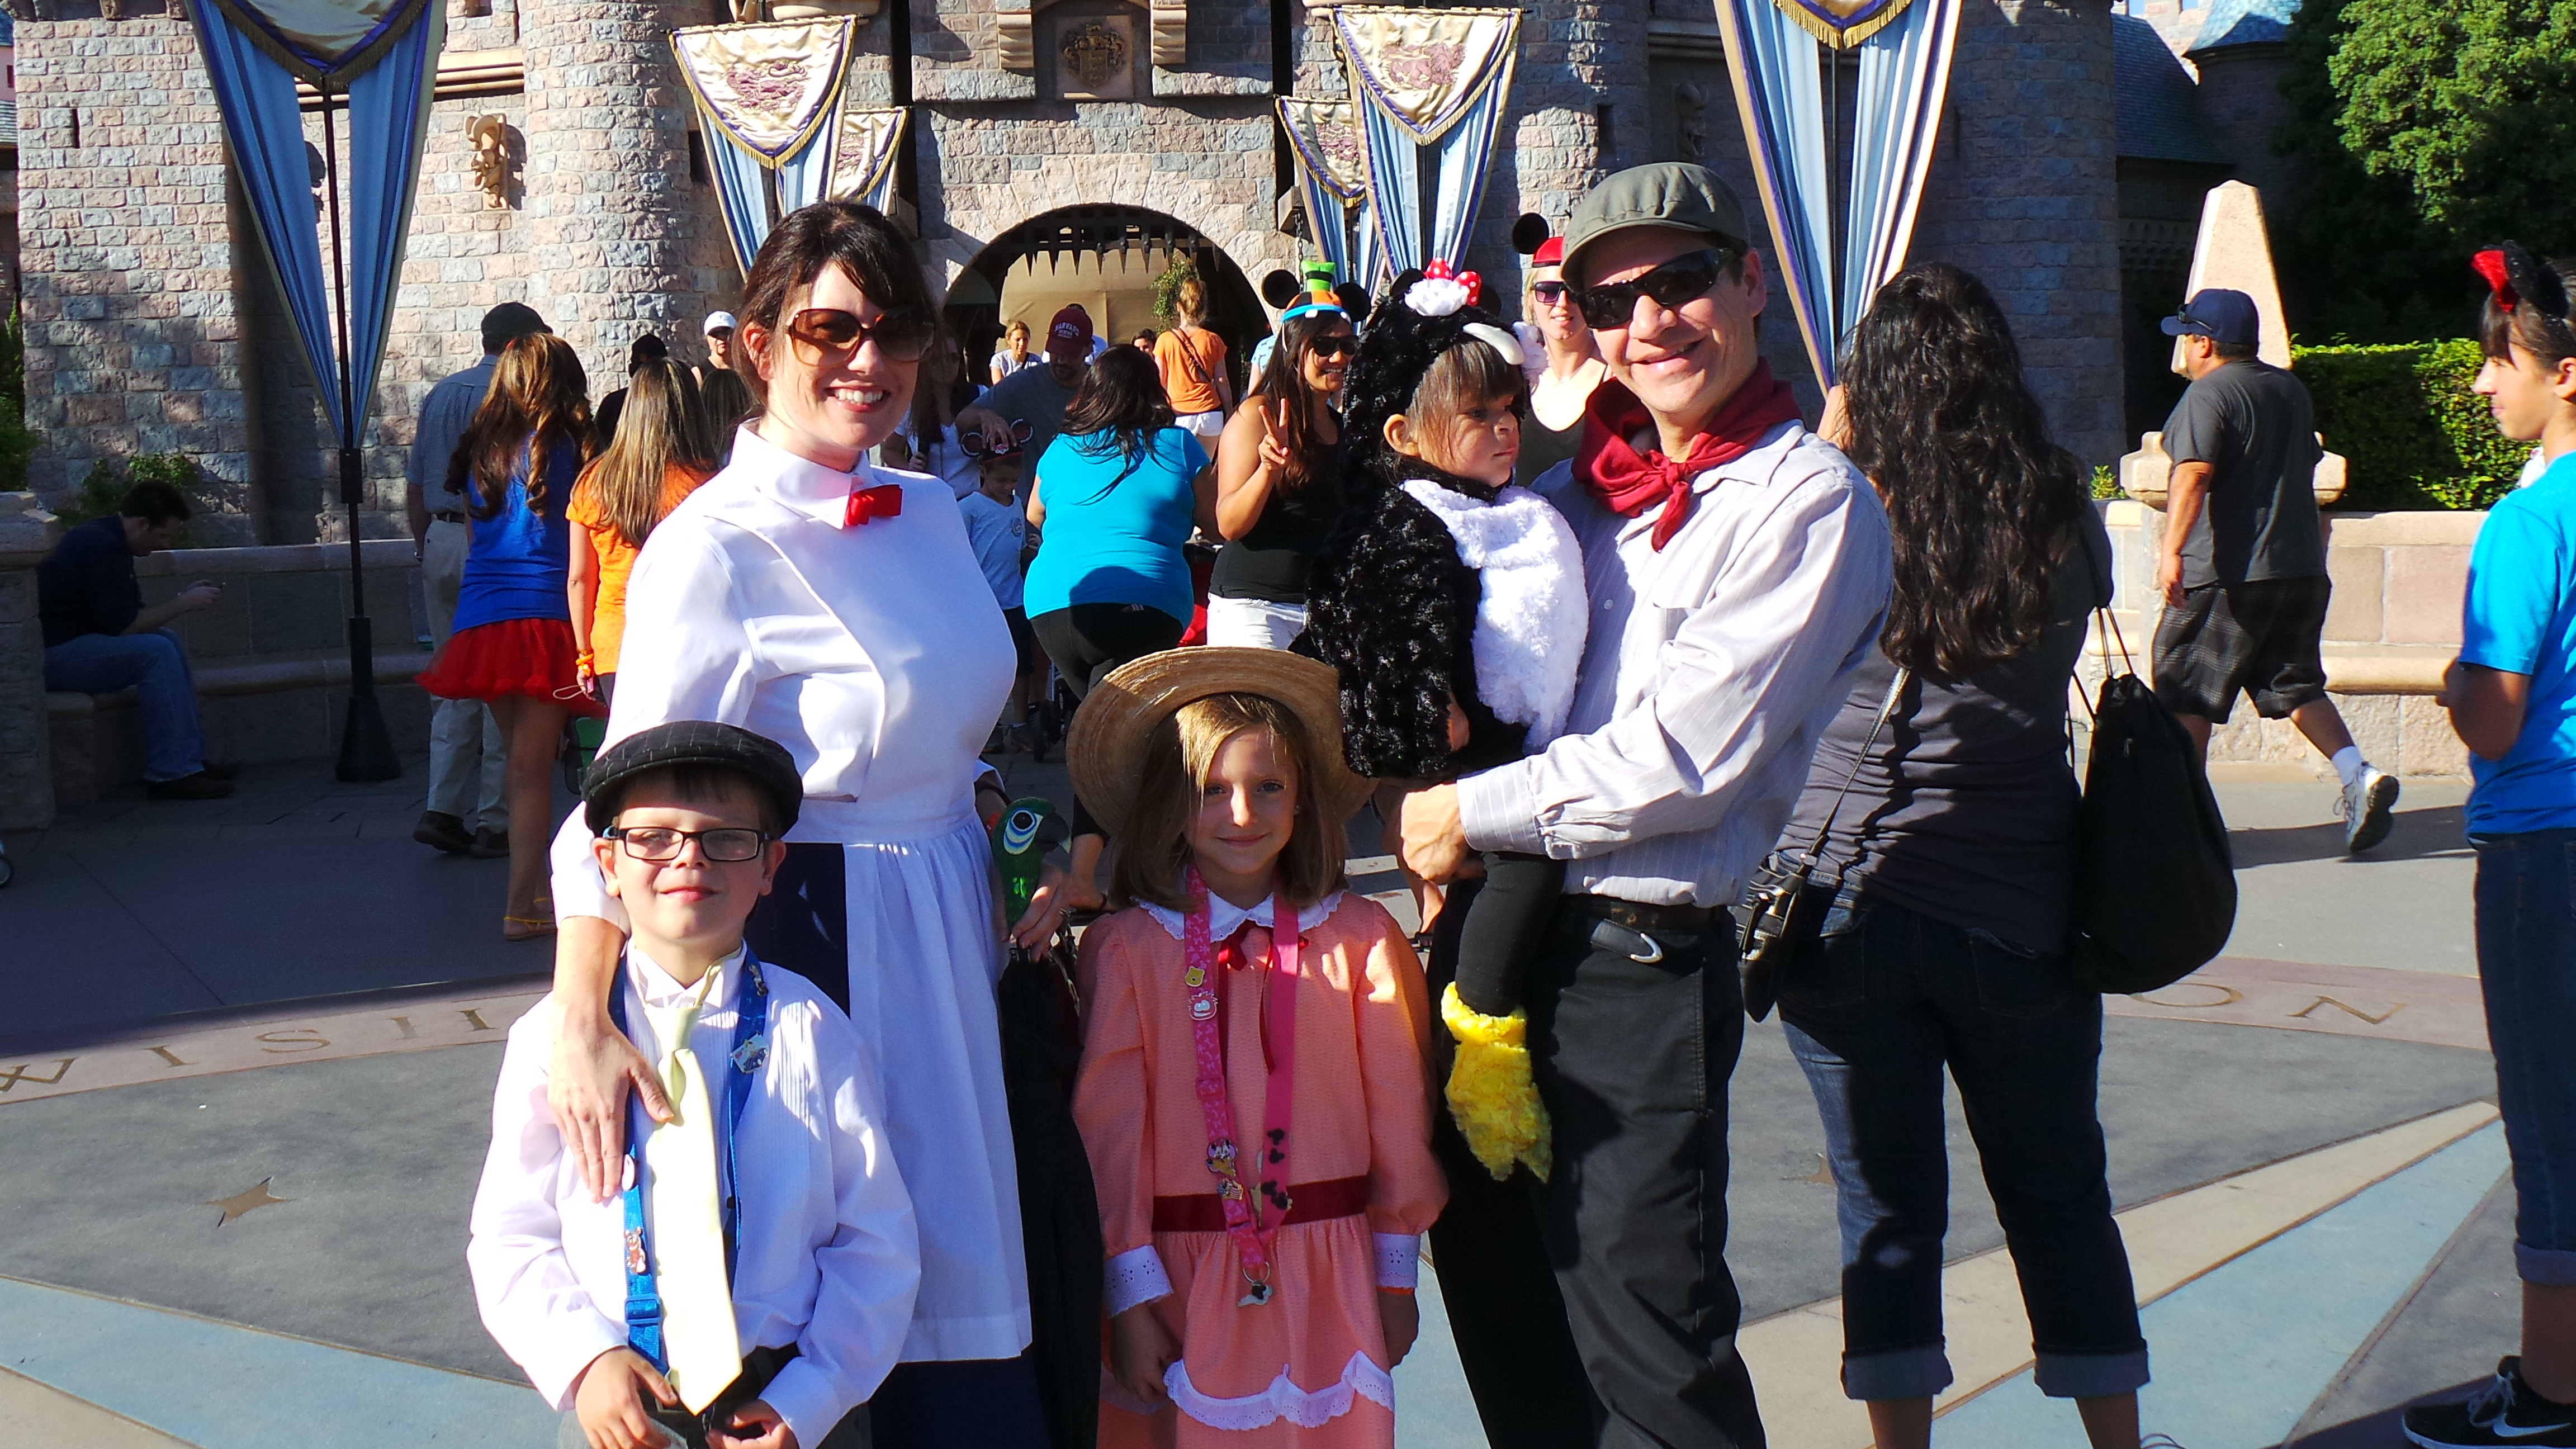 https://highlightsalongtheway.com/wp-content/uploads/2013/09/Mary-Poppins-Cast-Disneyland1.jpg